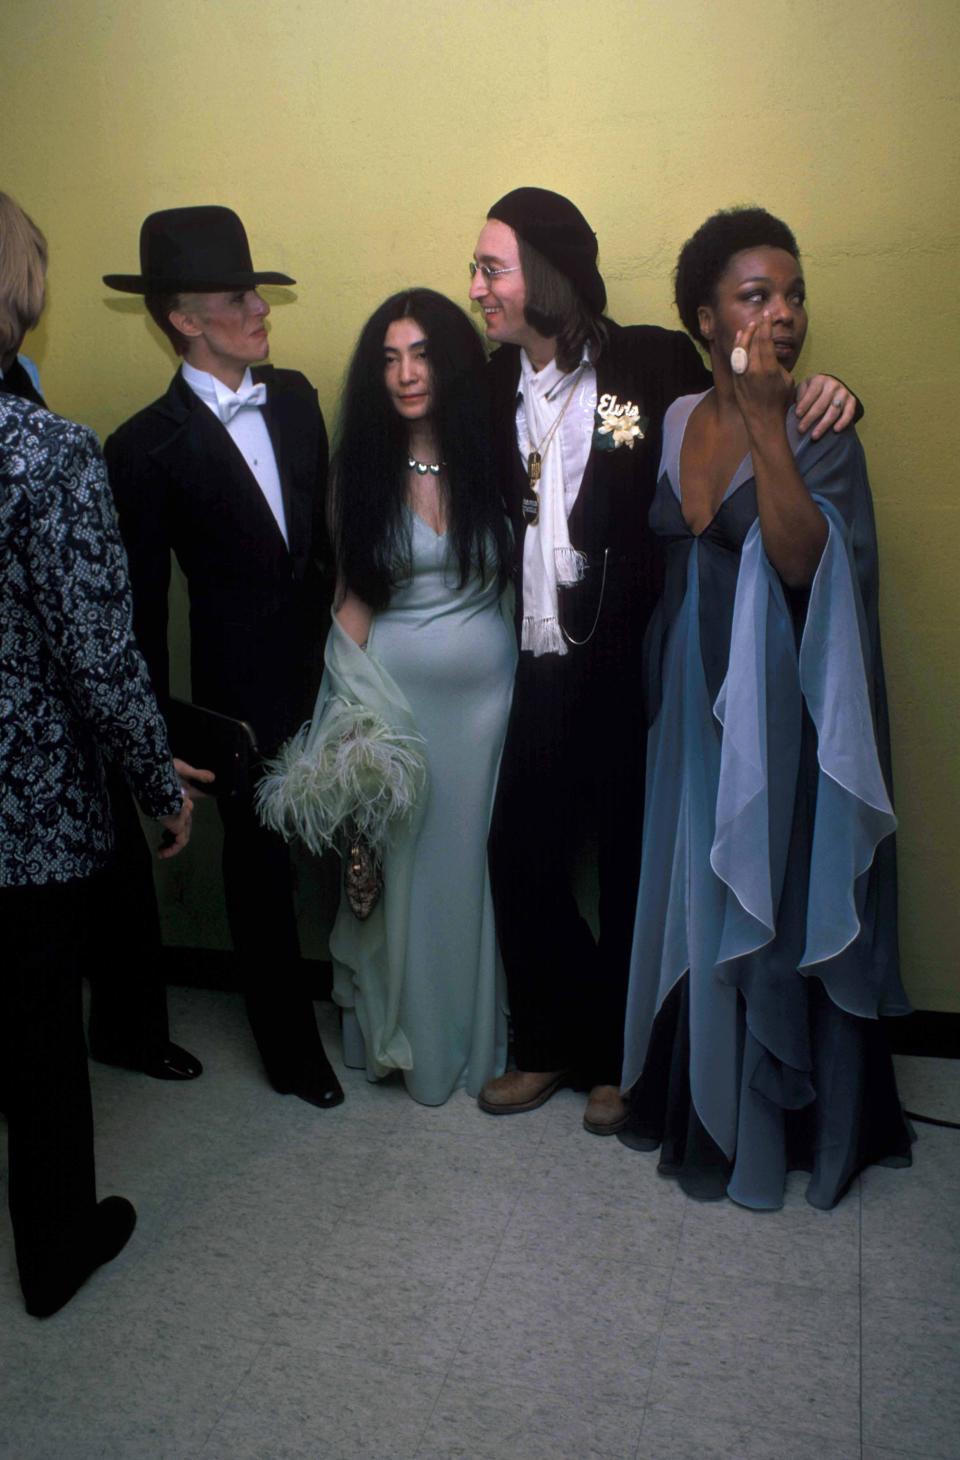 1975: David Bowie, Yoko Ono, John Lennon, and Roberta Flack